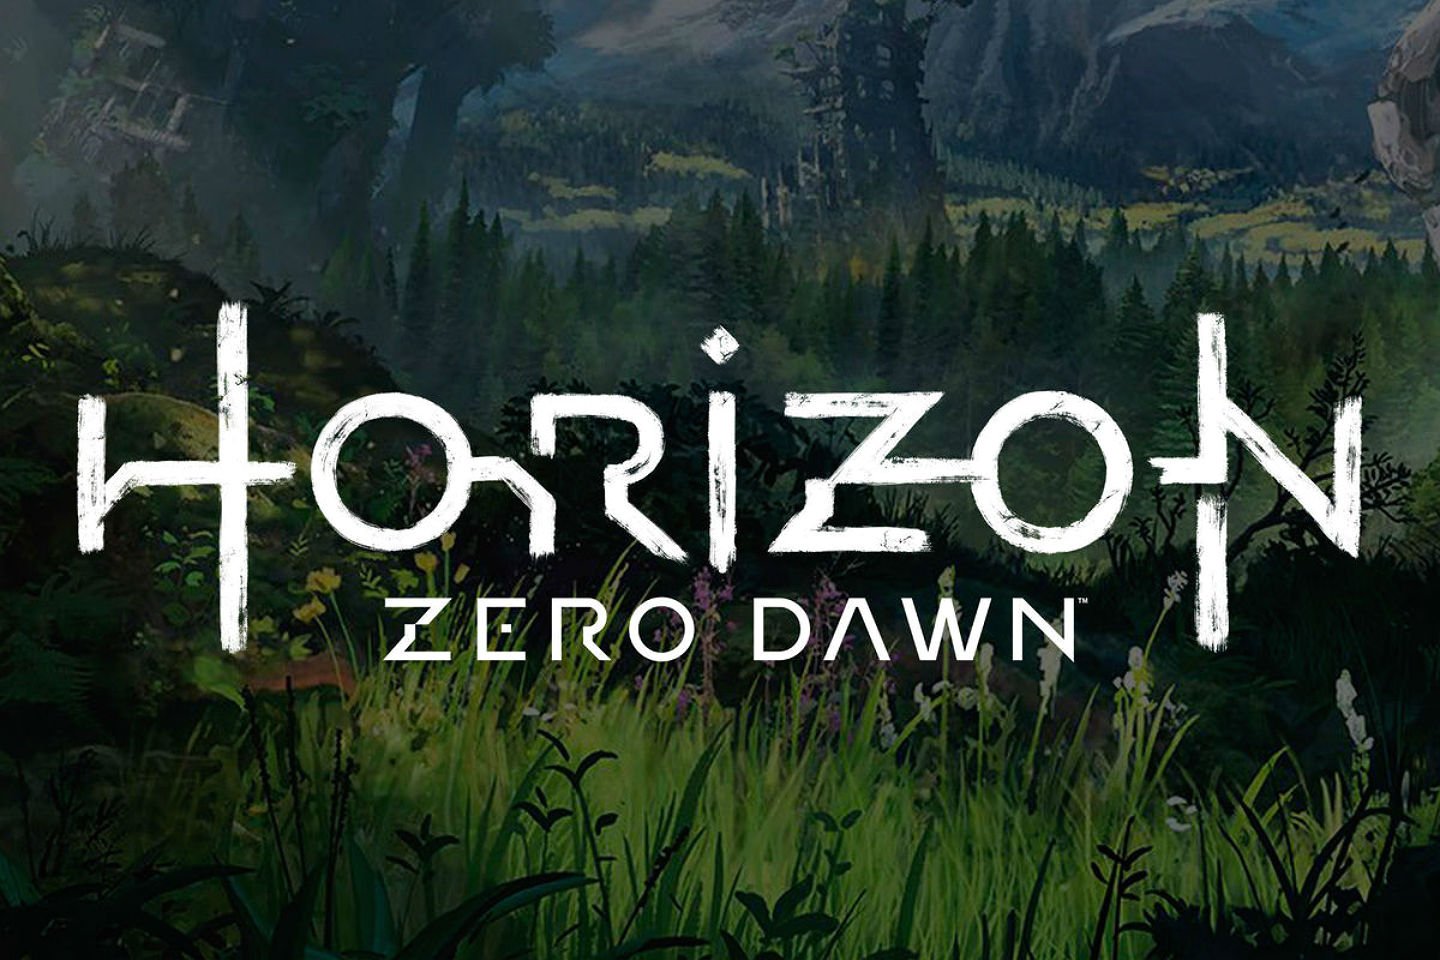 horizon, Zero, Dawn, Sci fi, Robot, Futuristic, 1hzd, Archer, Fantasy, Dinosaur, Action, Cyborg, Warrior, Poster Wallpaper